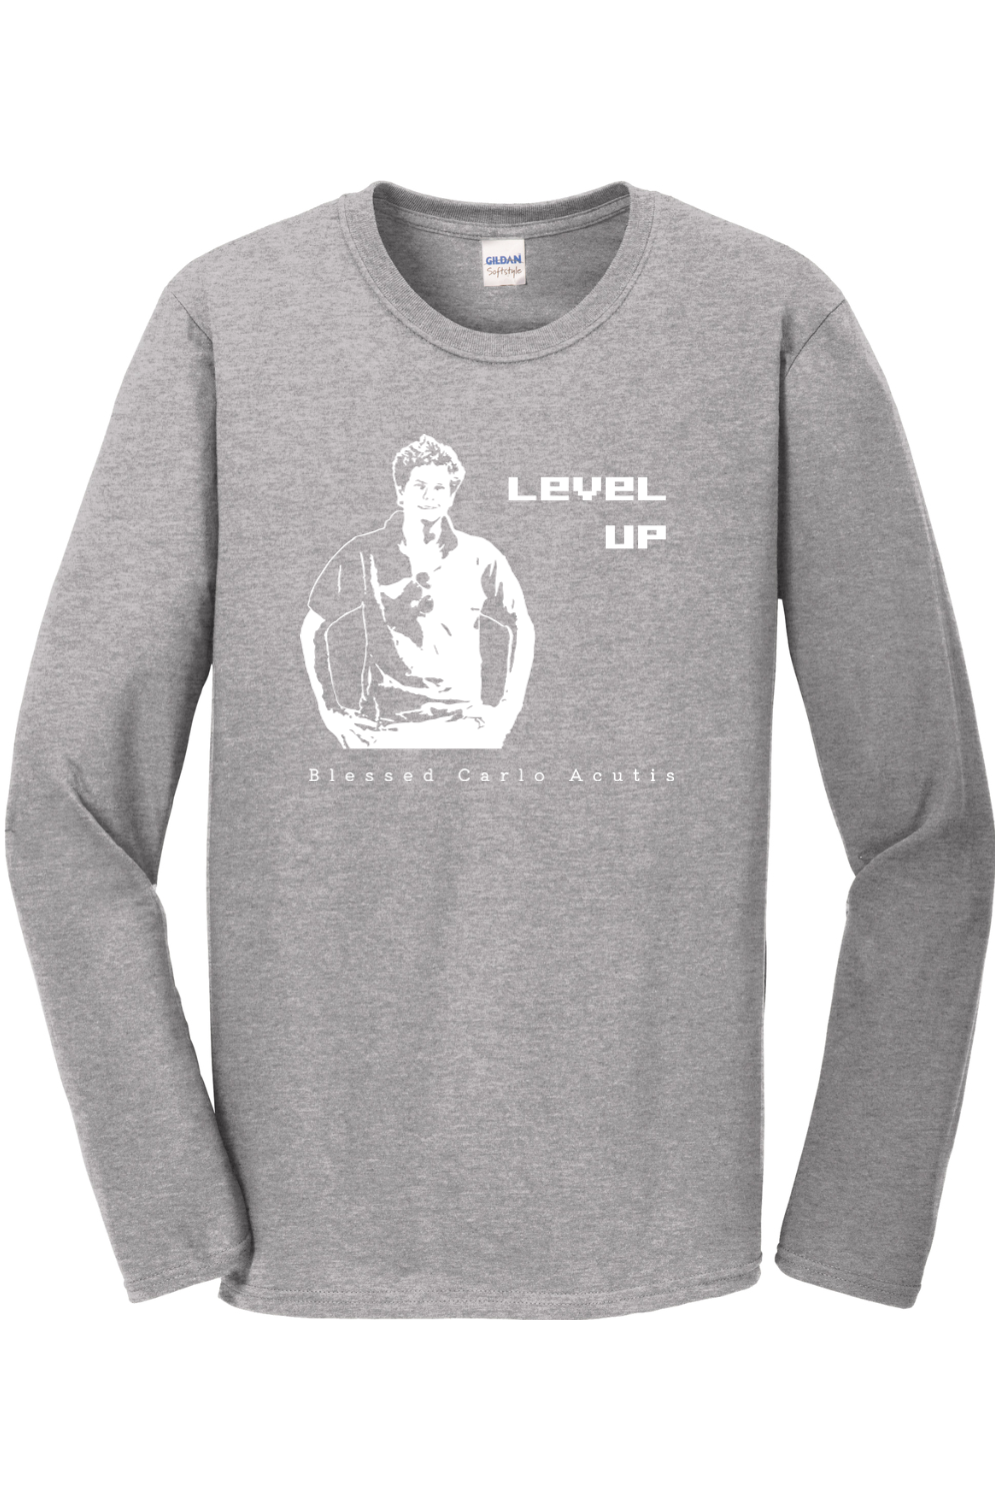 Level Up - Bl. Carlo Acutis - Long Sleeve